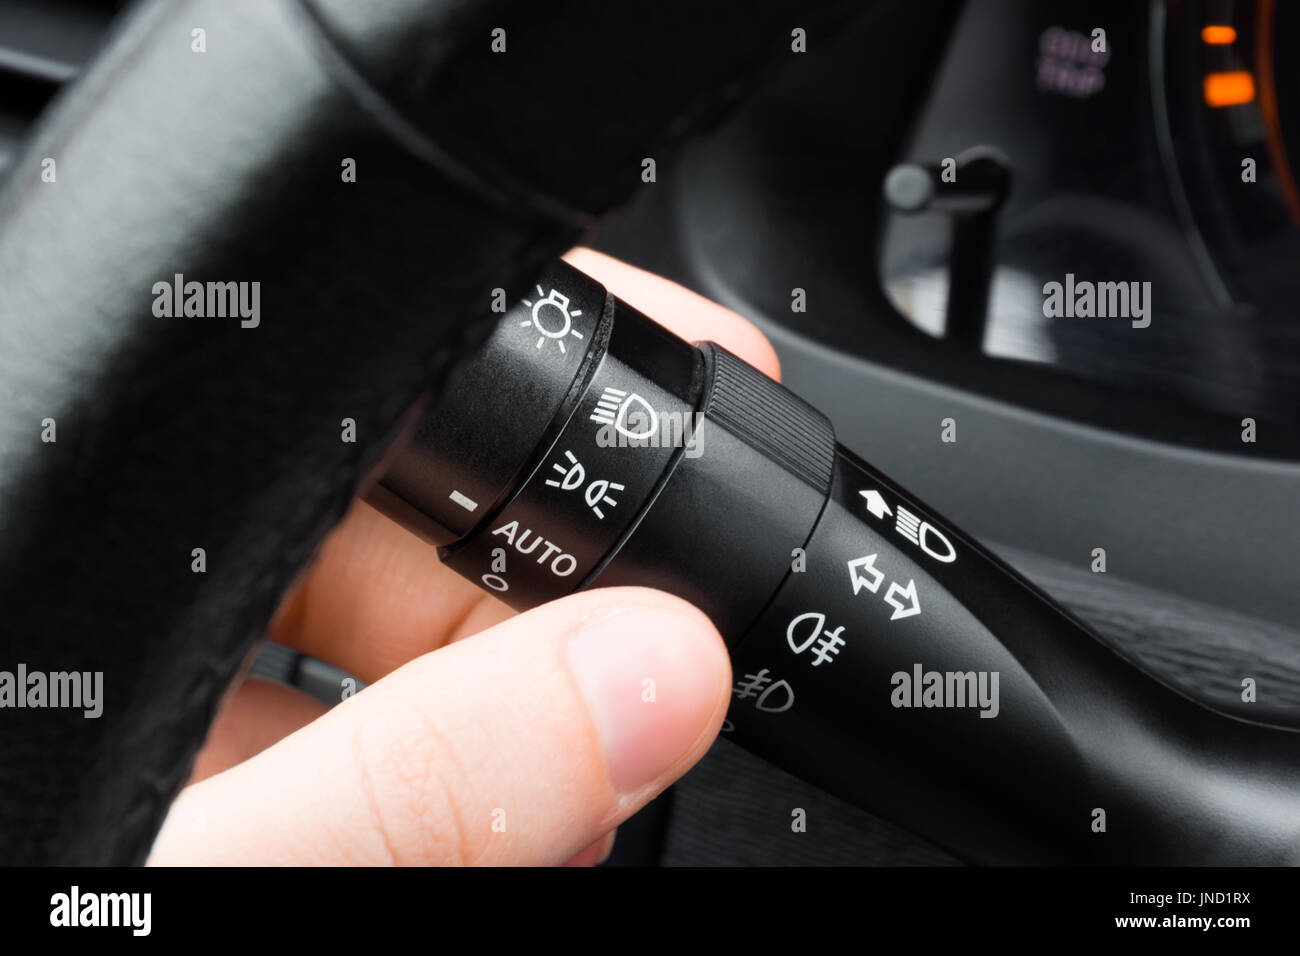 https://c8.alamy.com/comp/JND1RX/driver-hand-turning-on-headlight-using-under-steering-switch-headlight-JND1RX.jpg